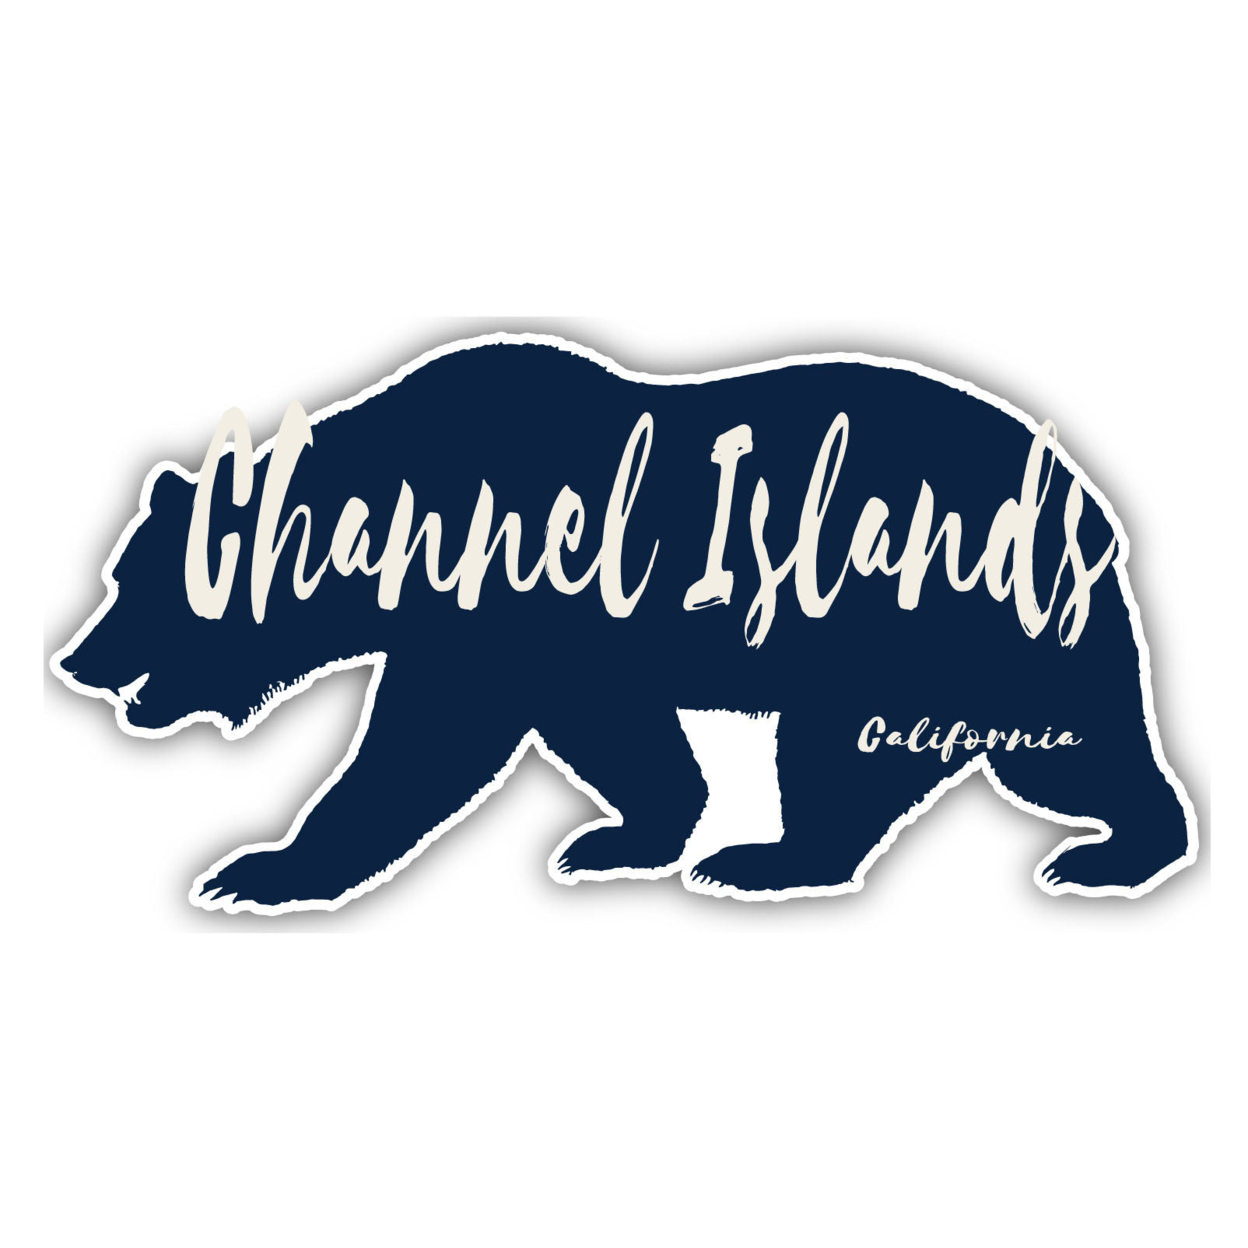 Channel Islands California Souvenir Decorative Stickers (Choose Theme And Size) - Single Unit, 2-Inch, Bear